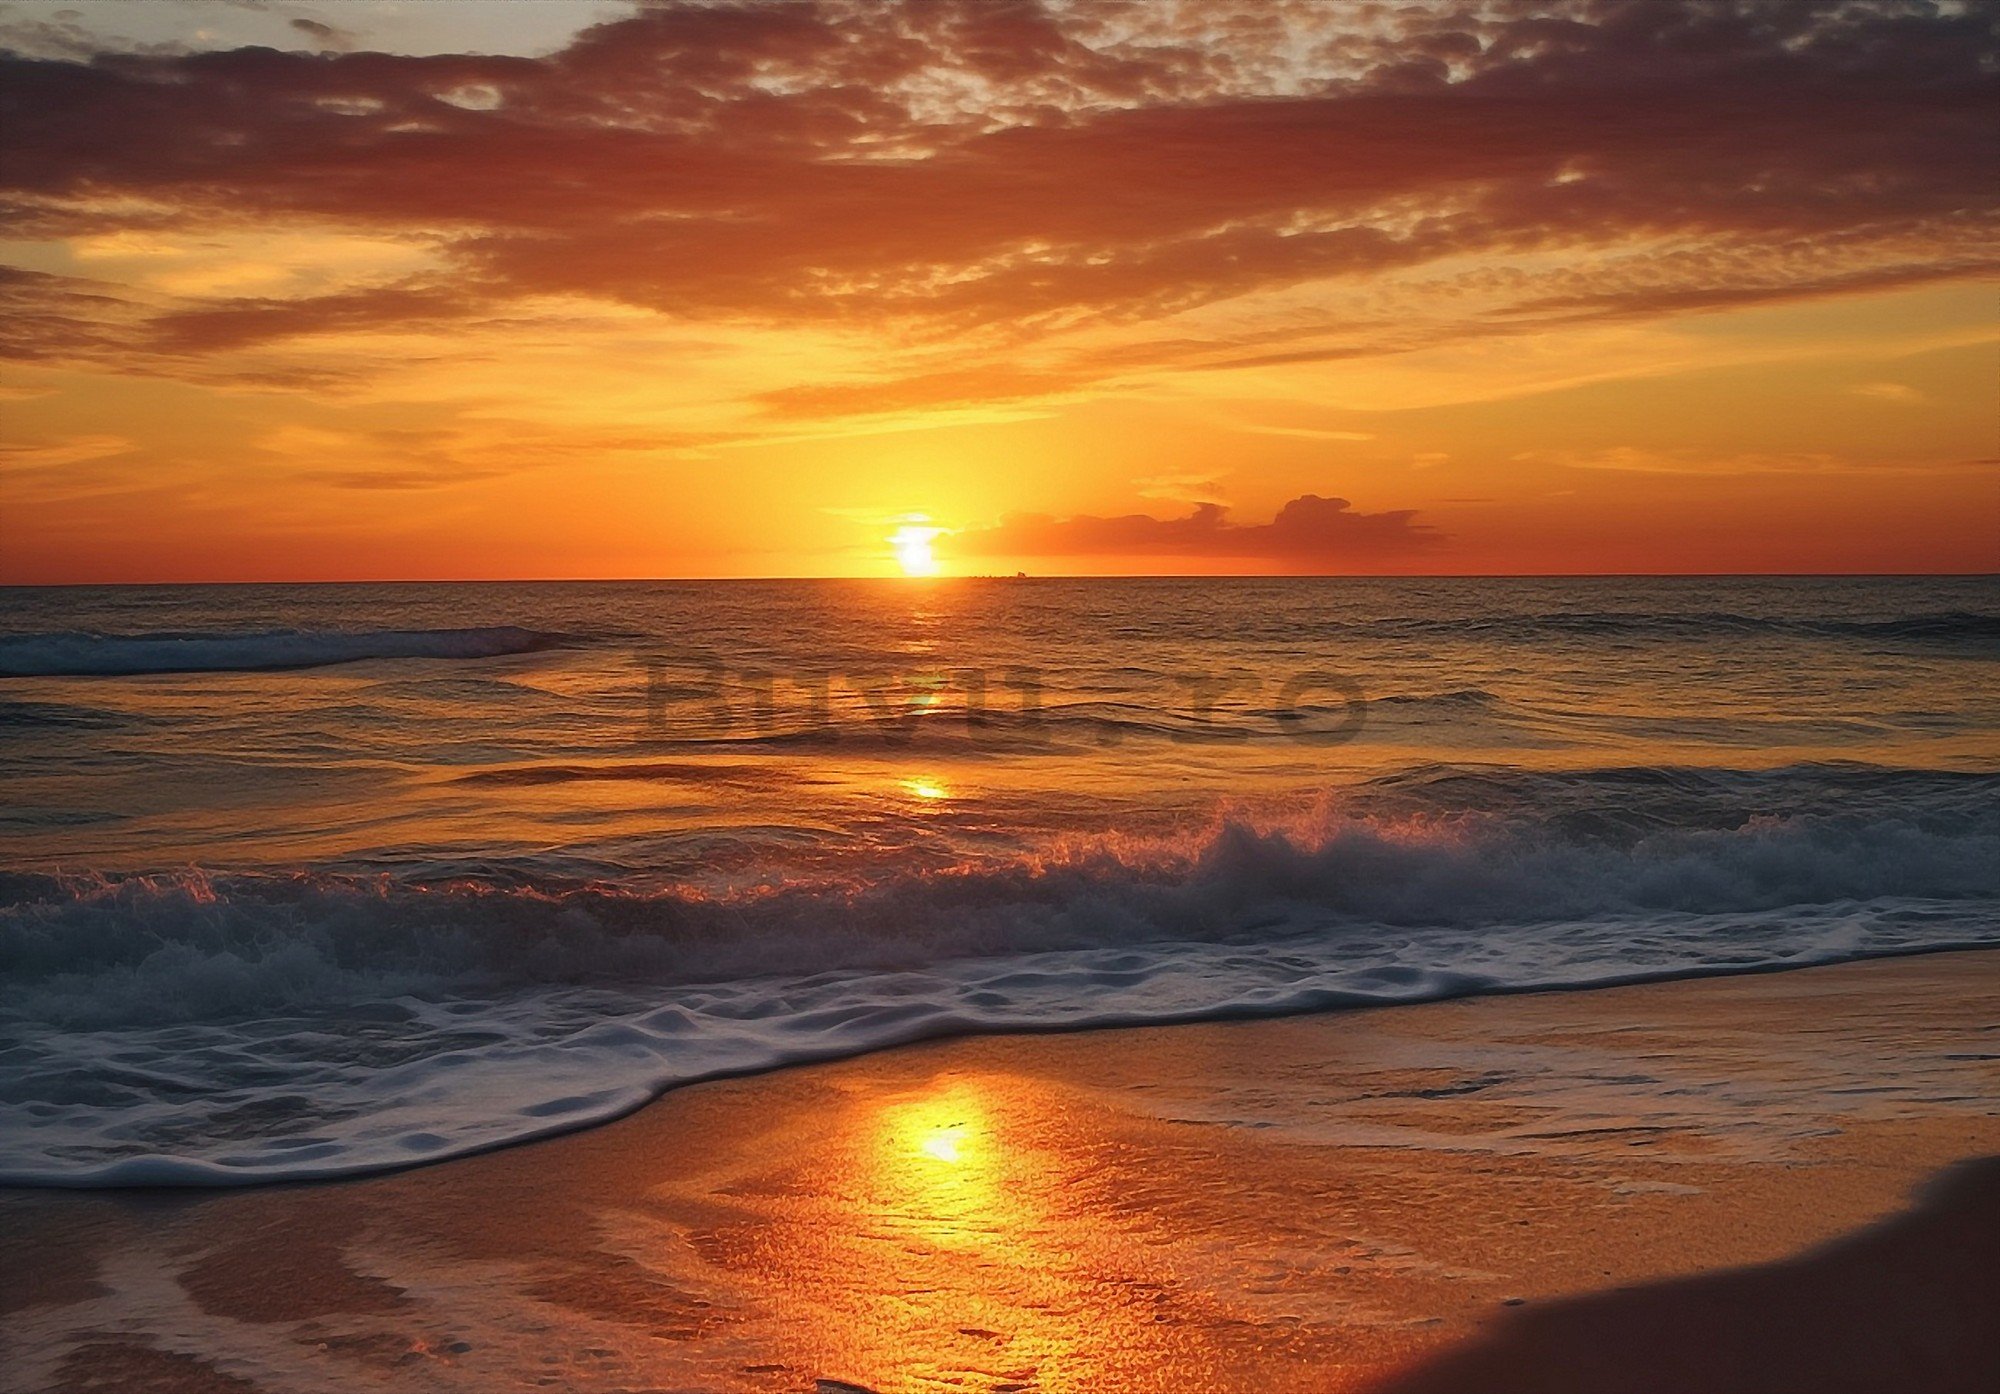 Fototapet vlies: Sea sunrise - 254x184 cm